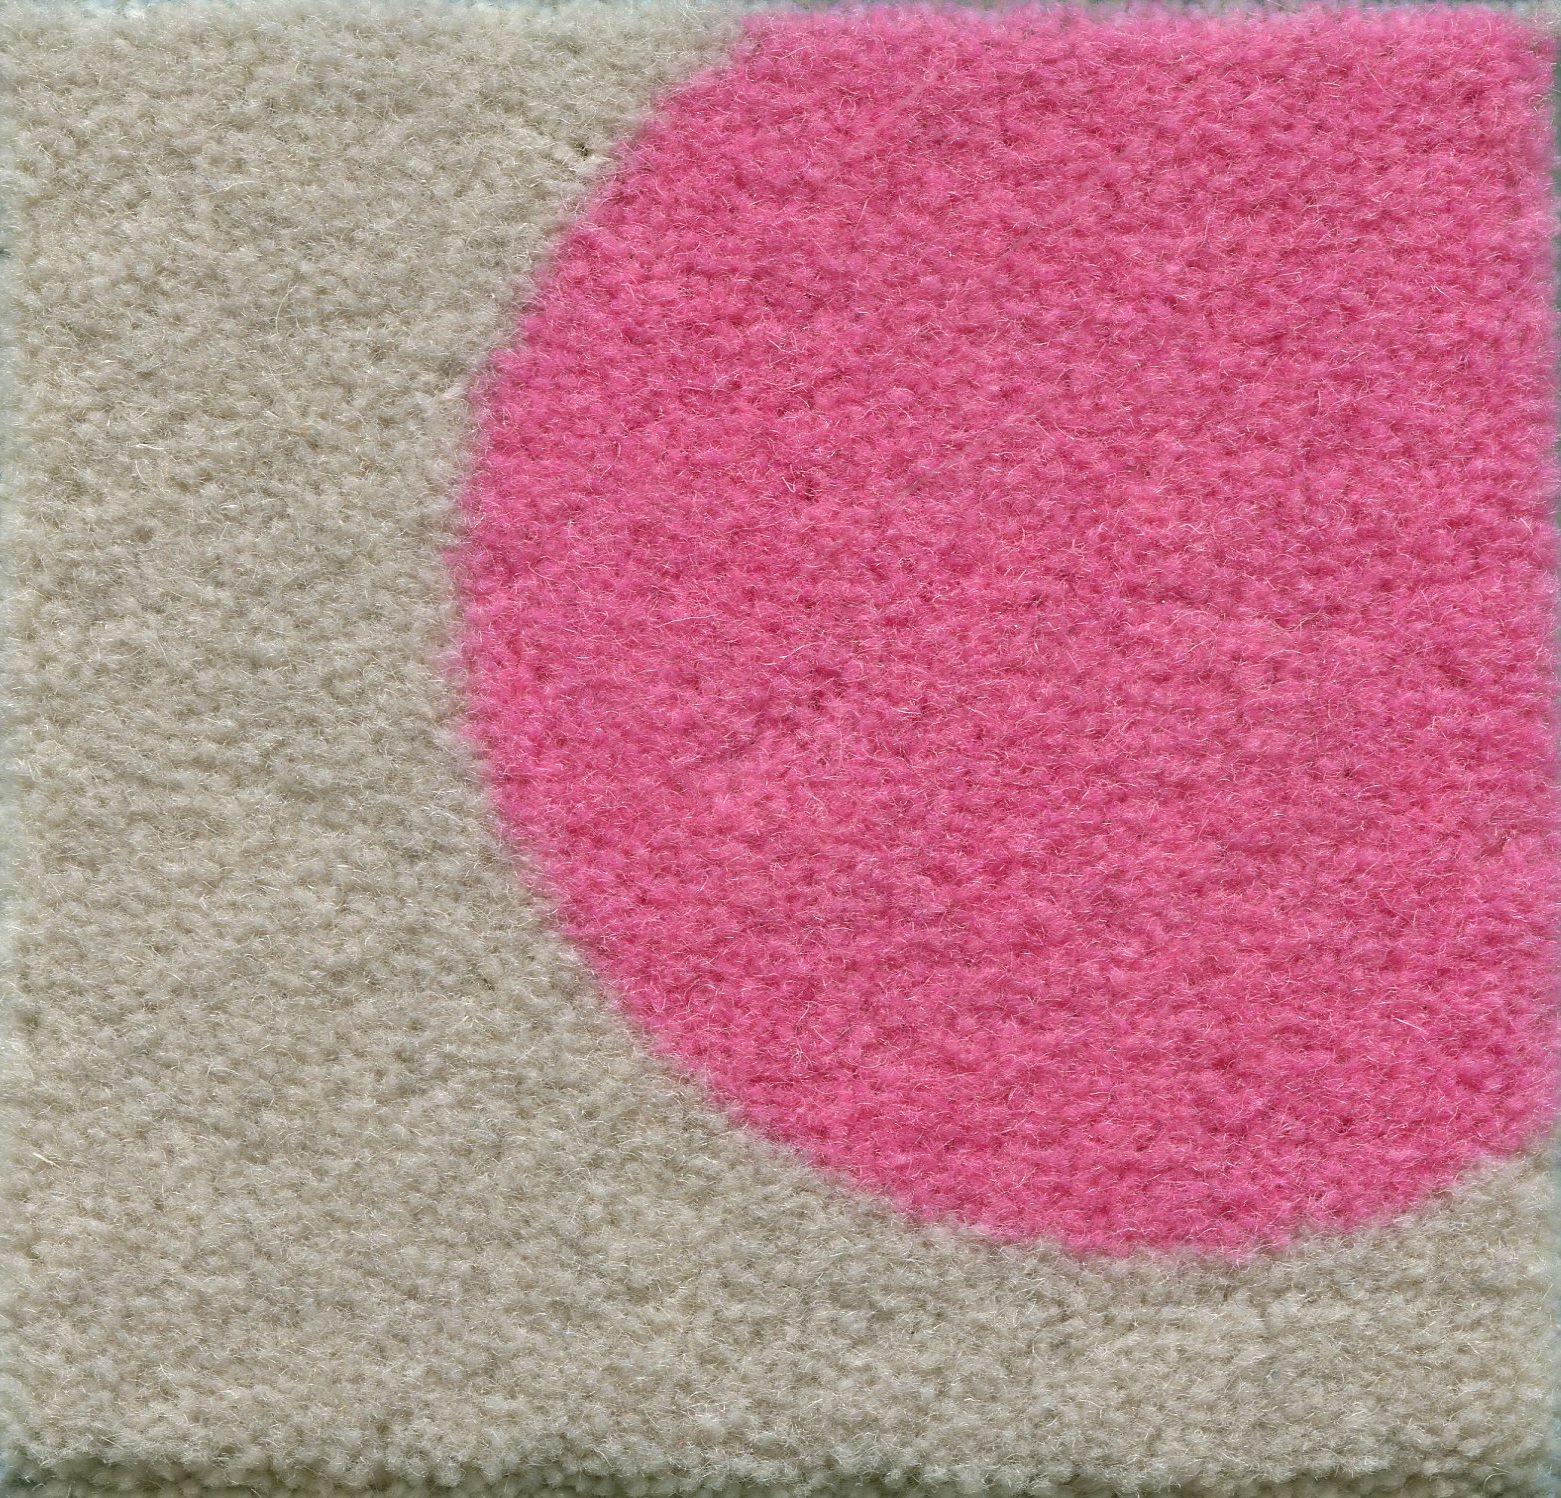 Circles in Squares Pink